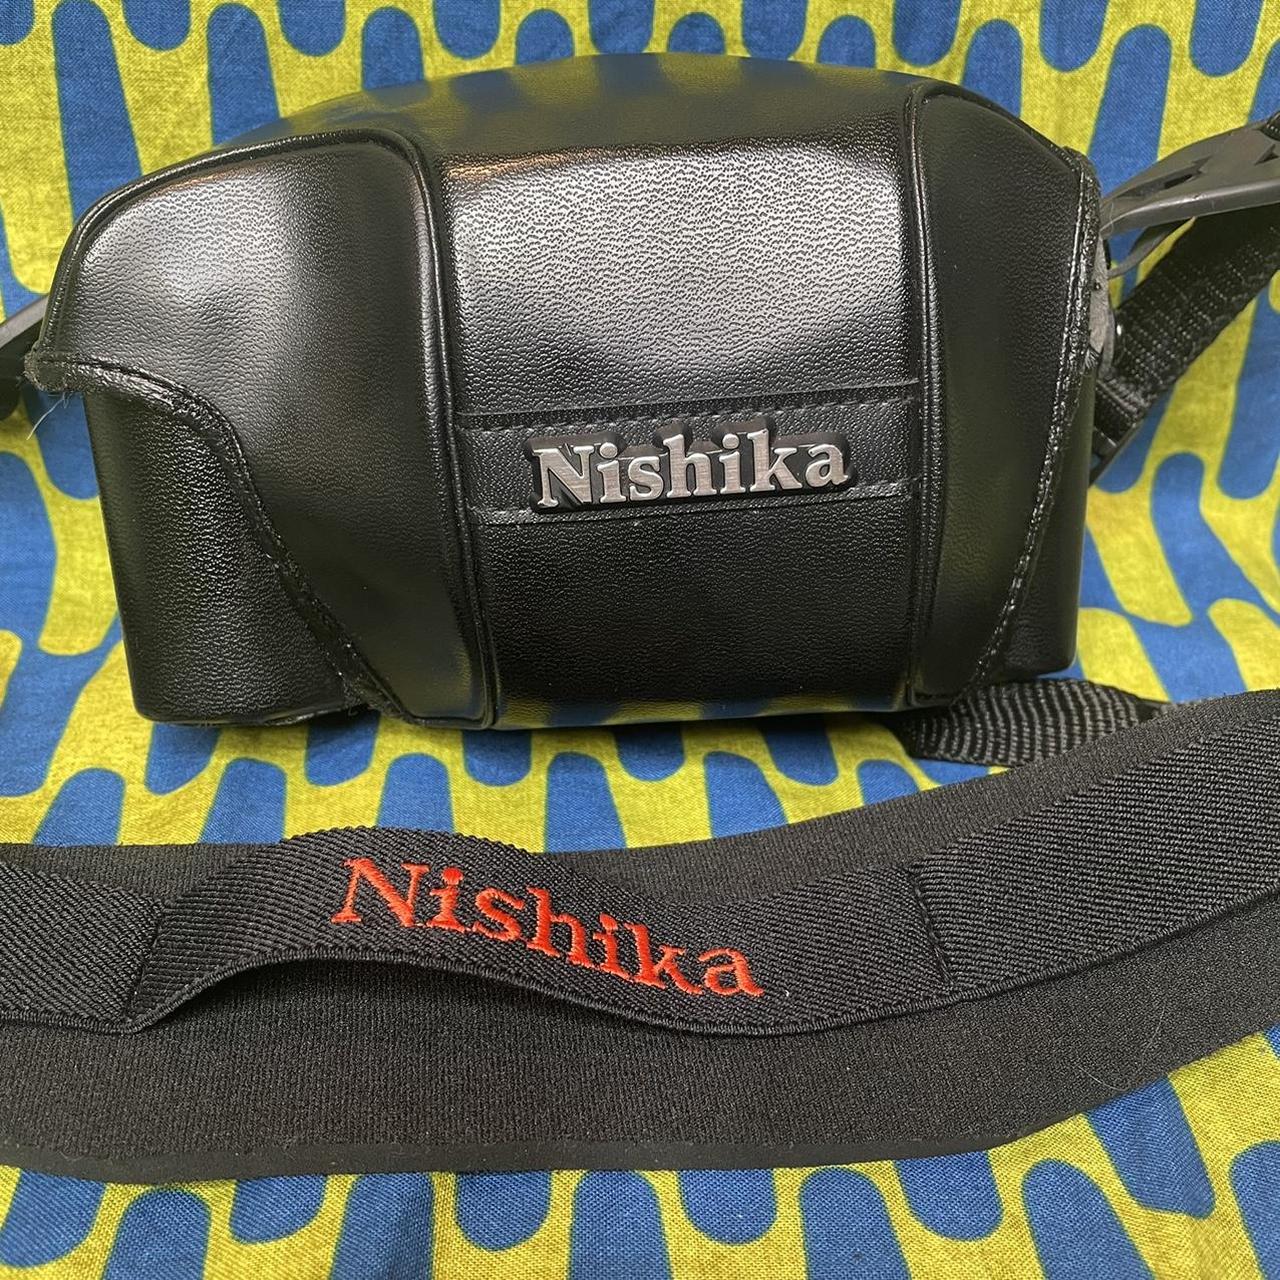 Nishika Black Cameras-and-accessories (3)